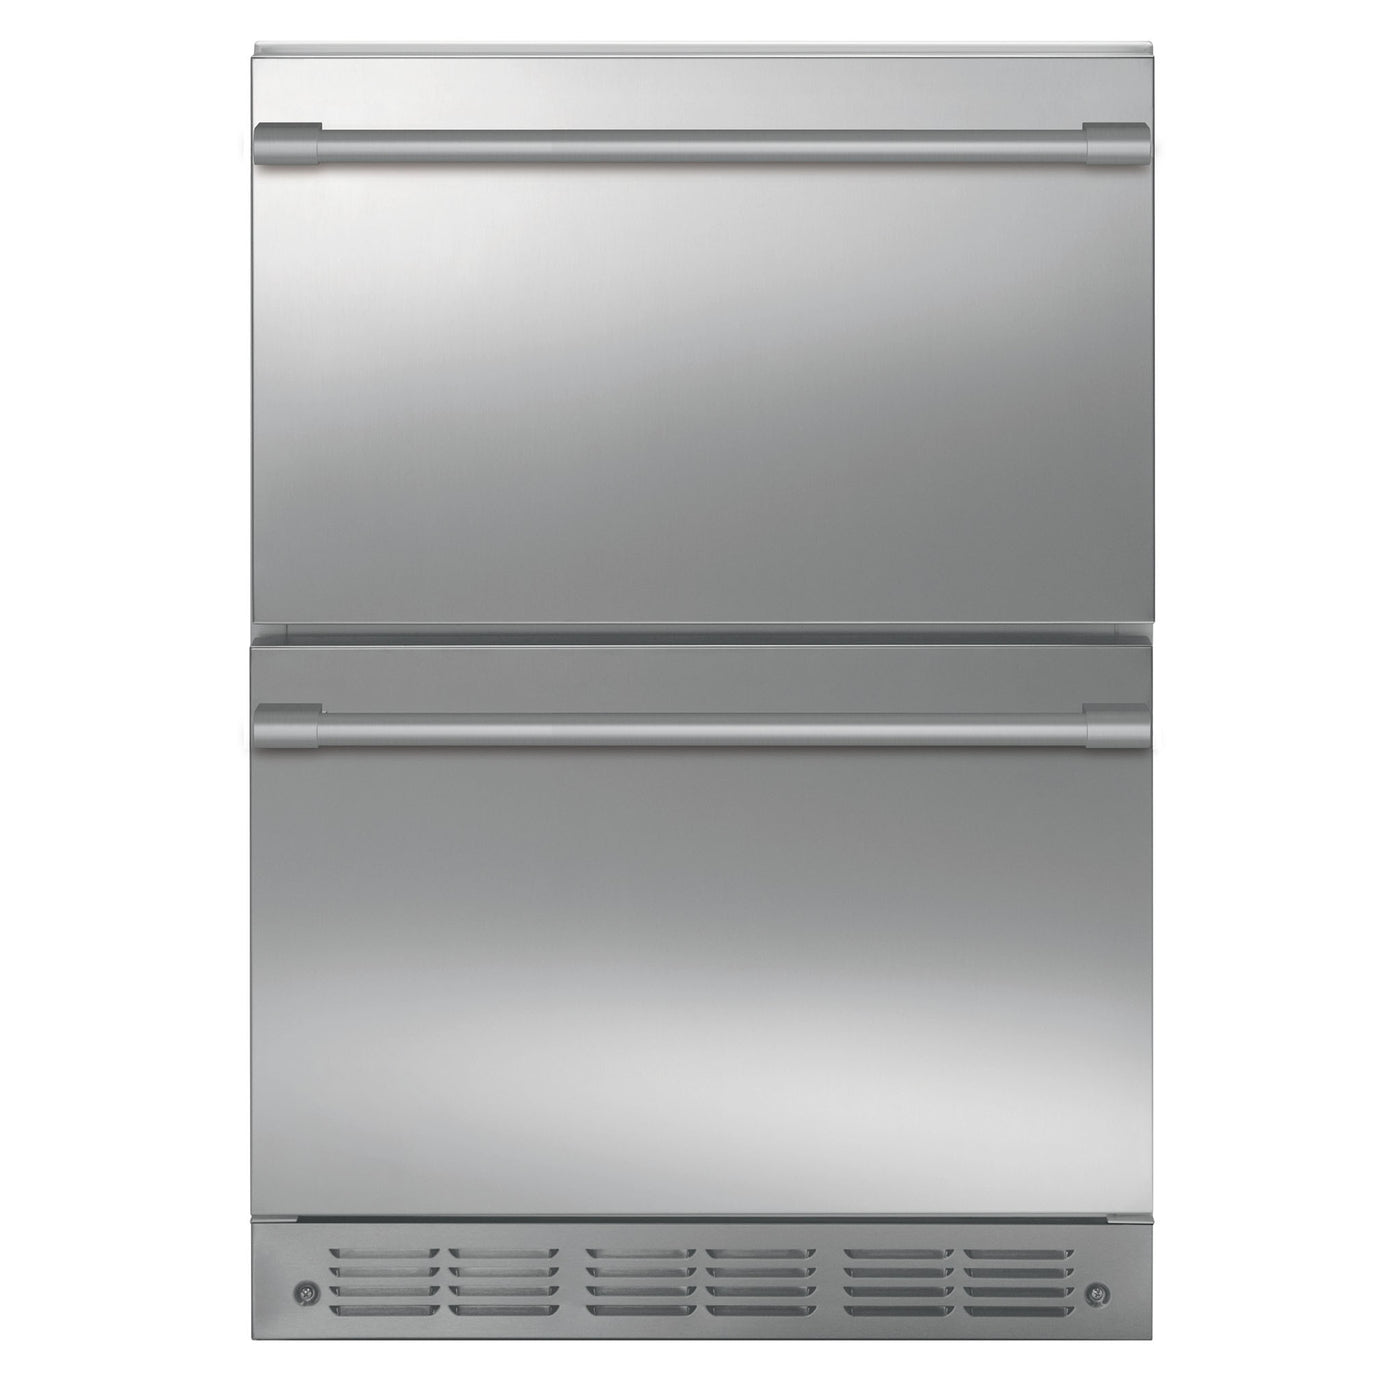 34 1/2" x 23 3/4" x 23 3/4" Monogram Double-Drawer Refrigerator